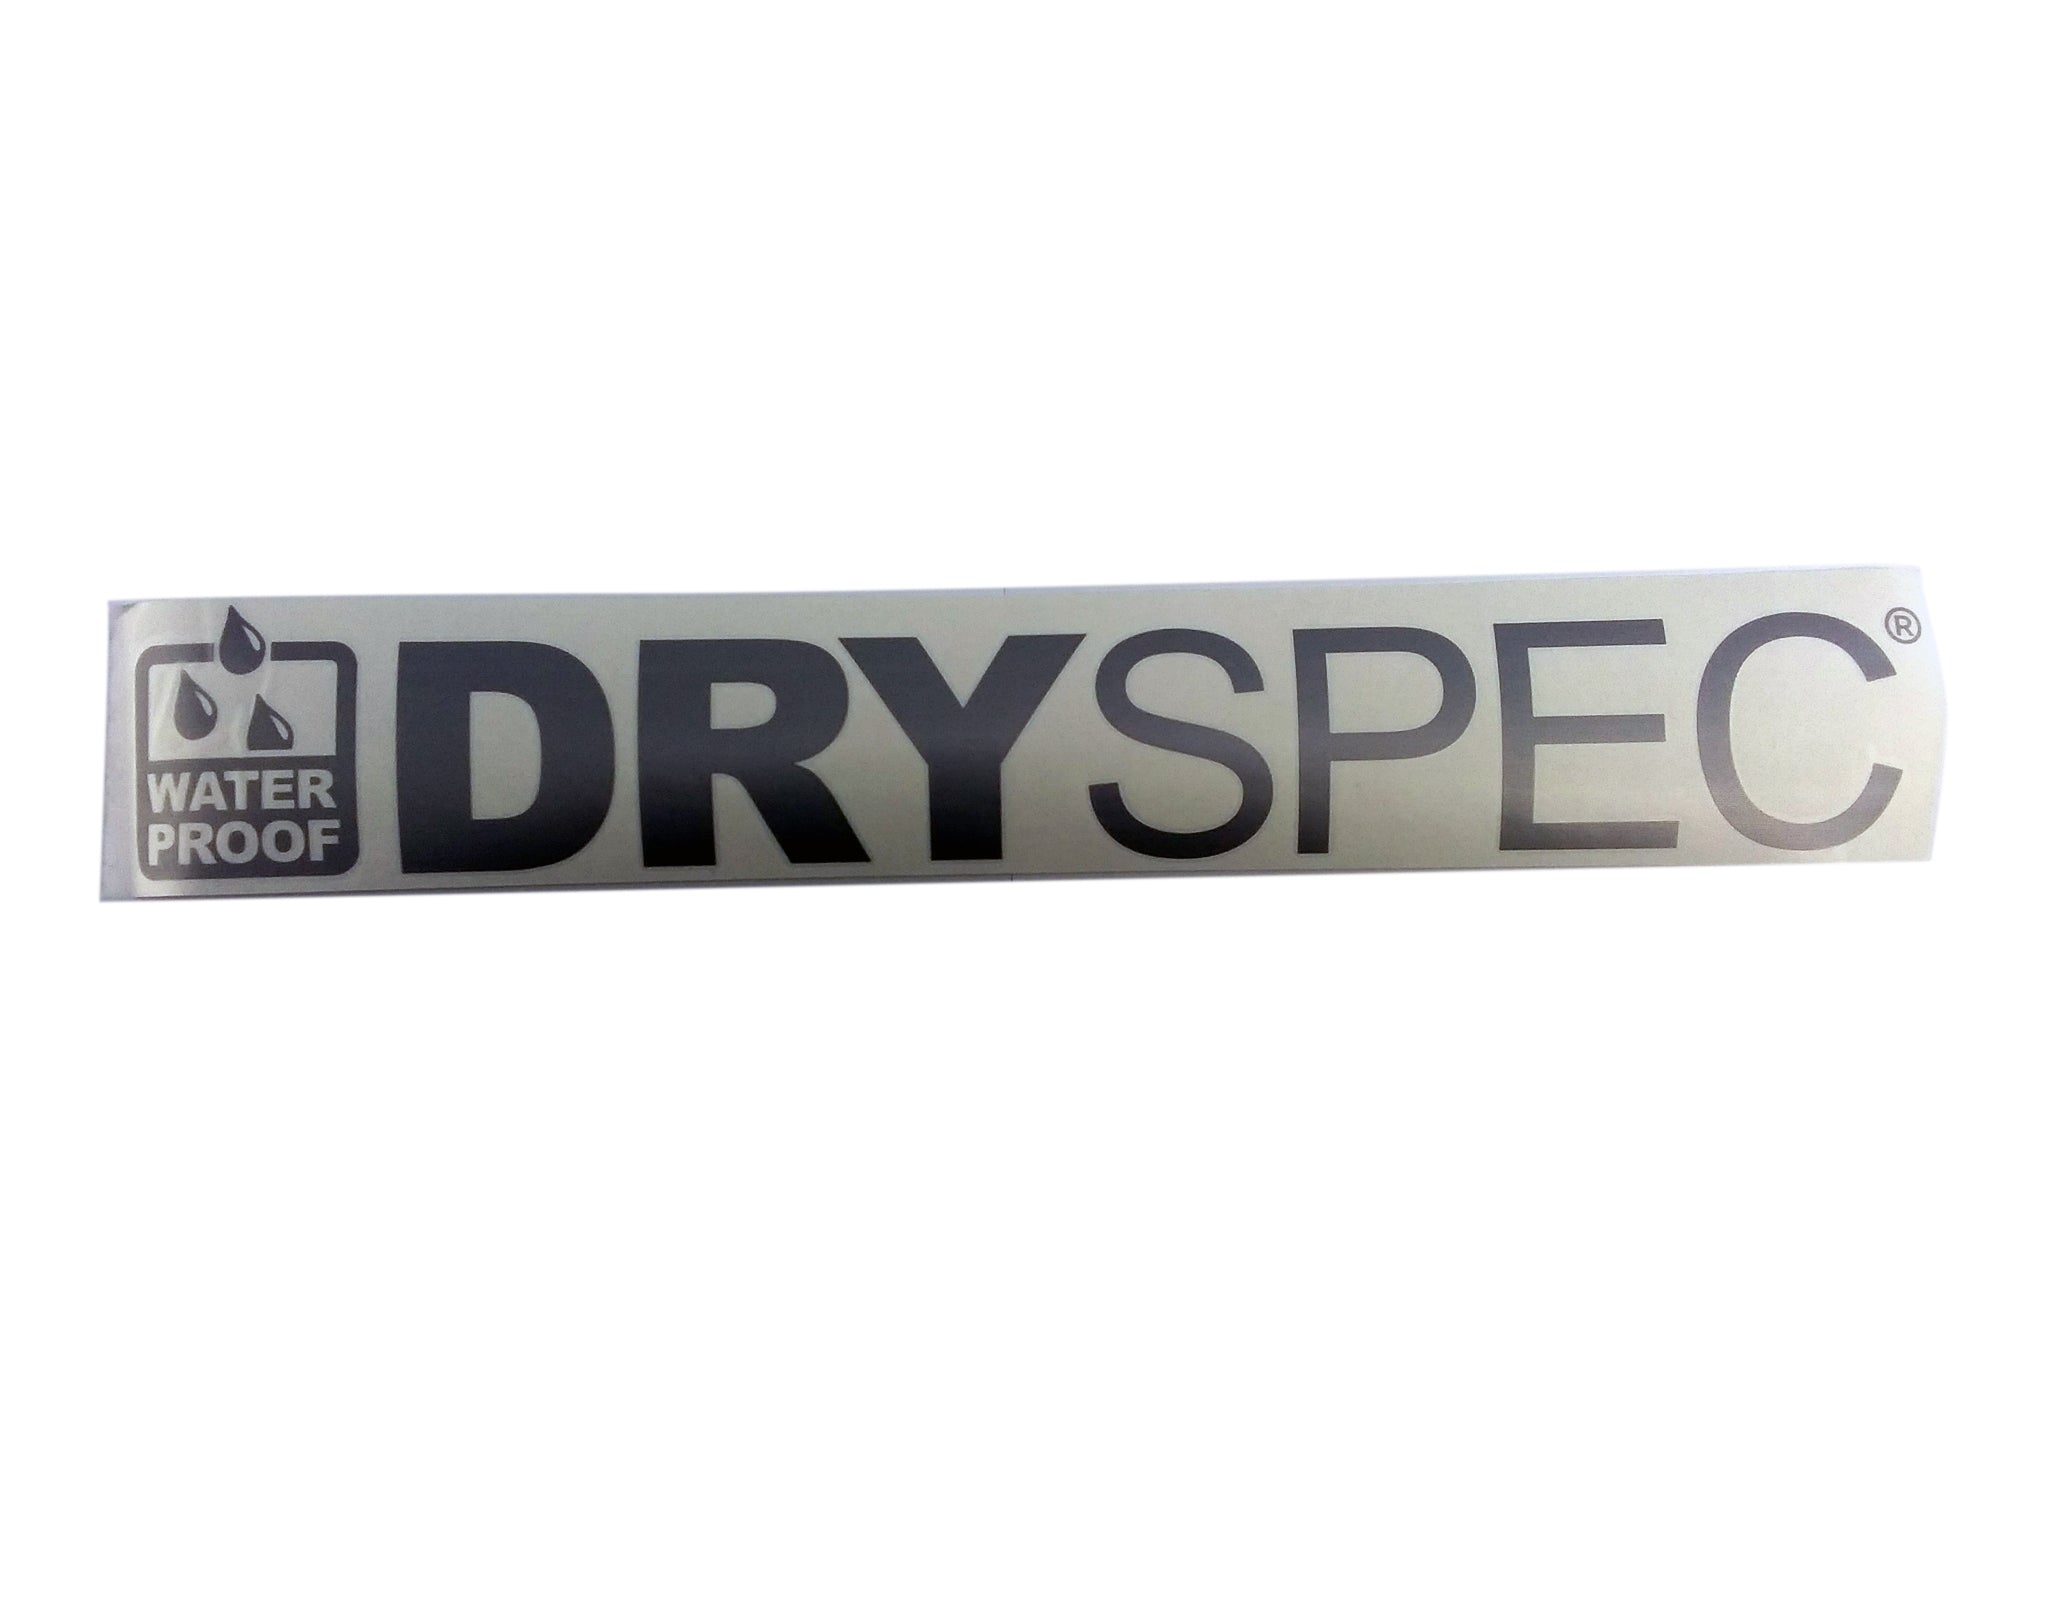 DRYSPEC Full Logo Transfer Decal, Silver Metallic, 21x4